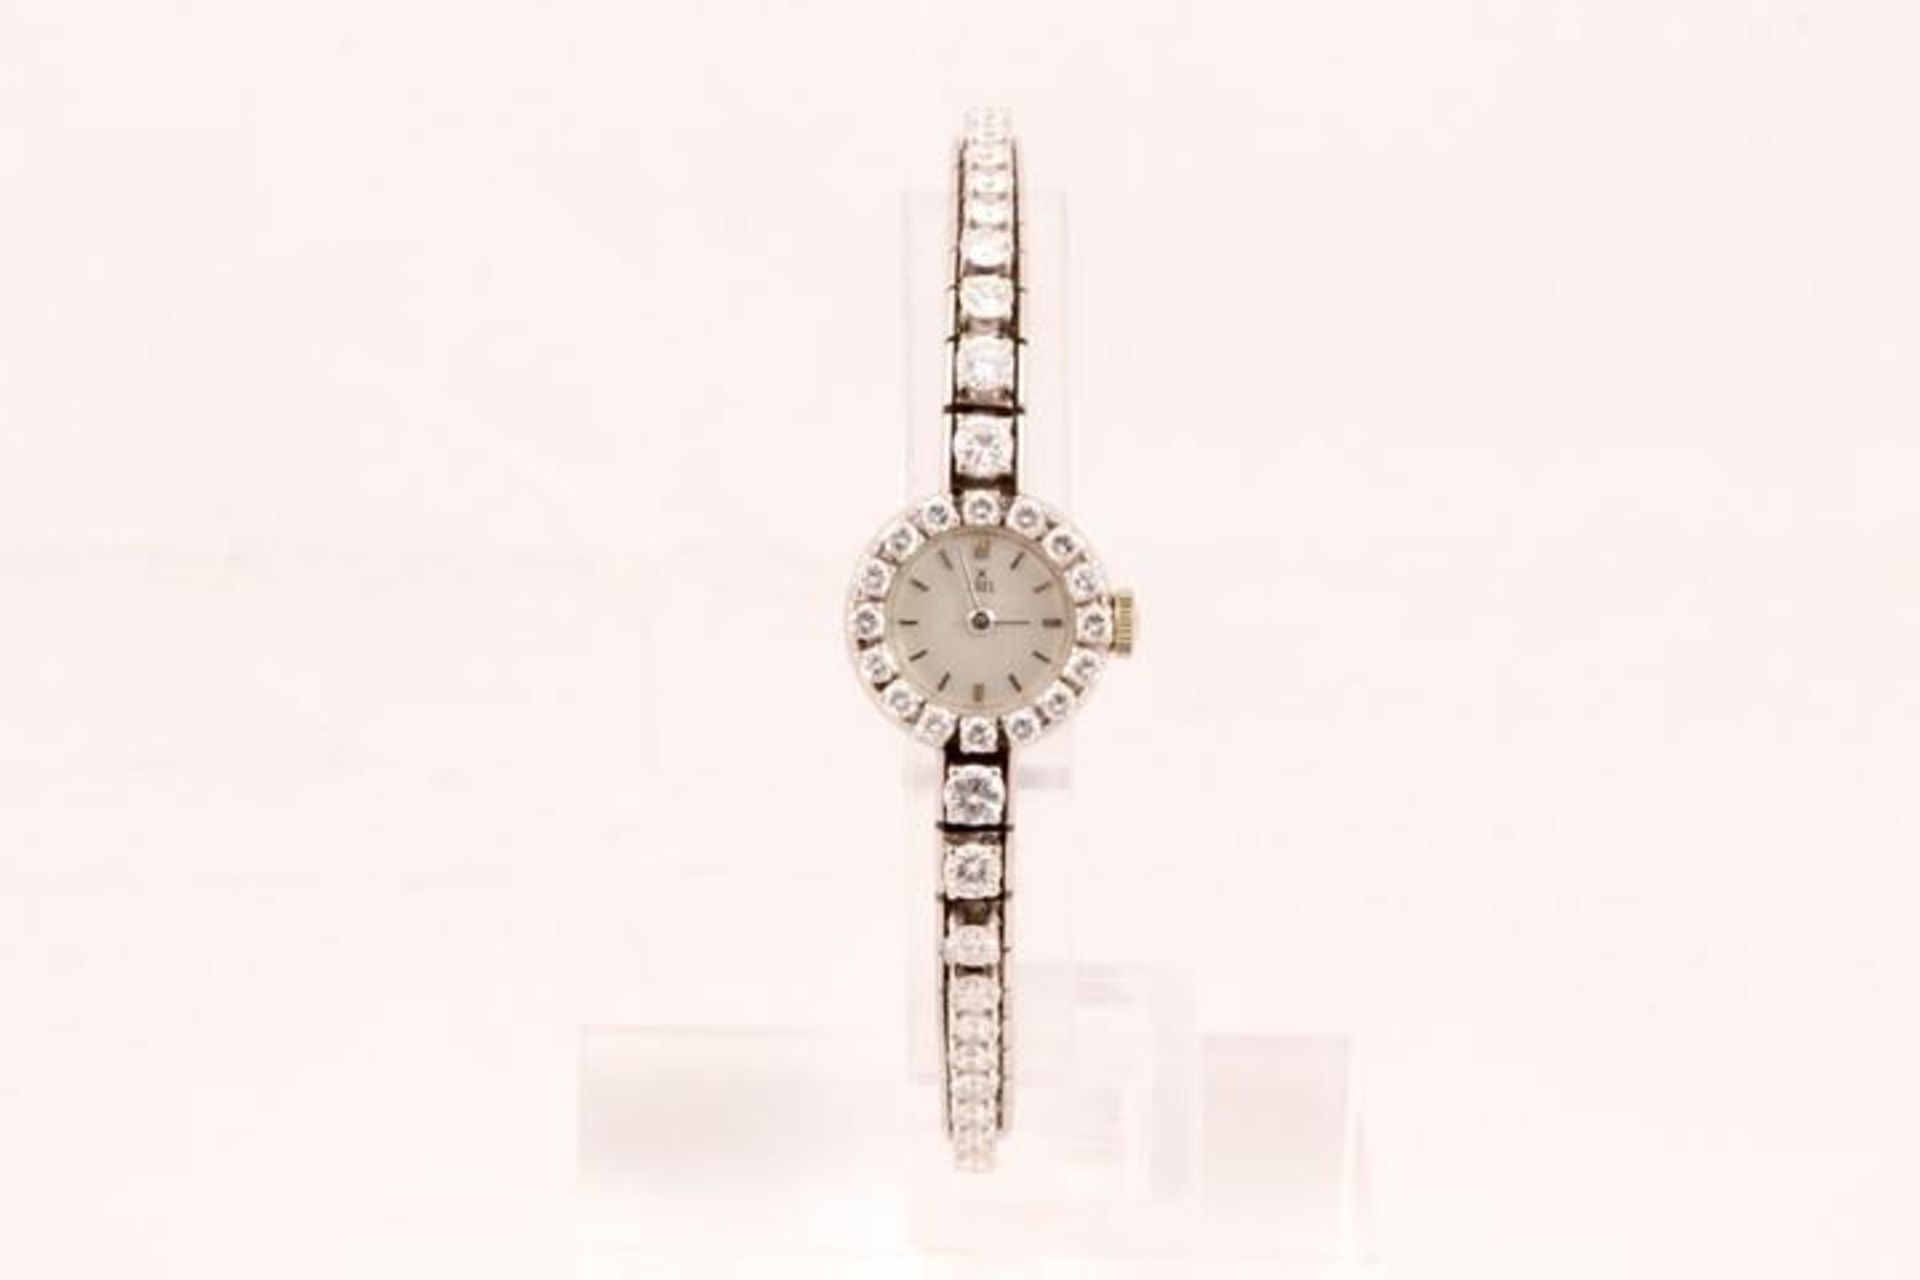 Ebel Ladies 18ct White Gold Watch with Diamond Bezel - Image 4 of 6